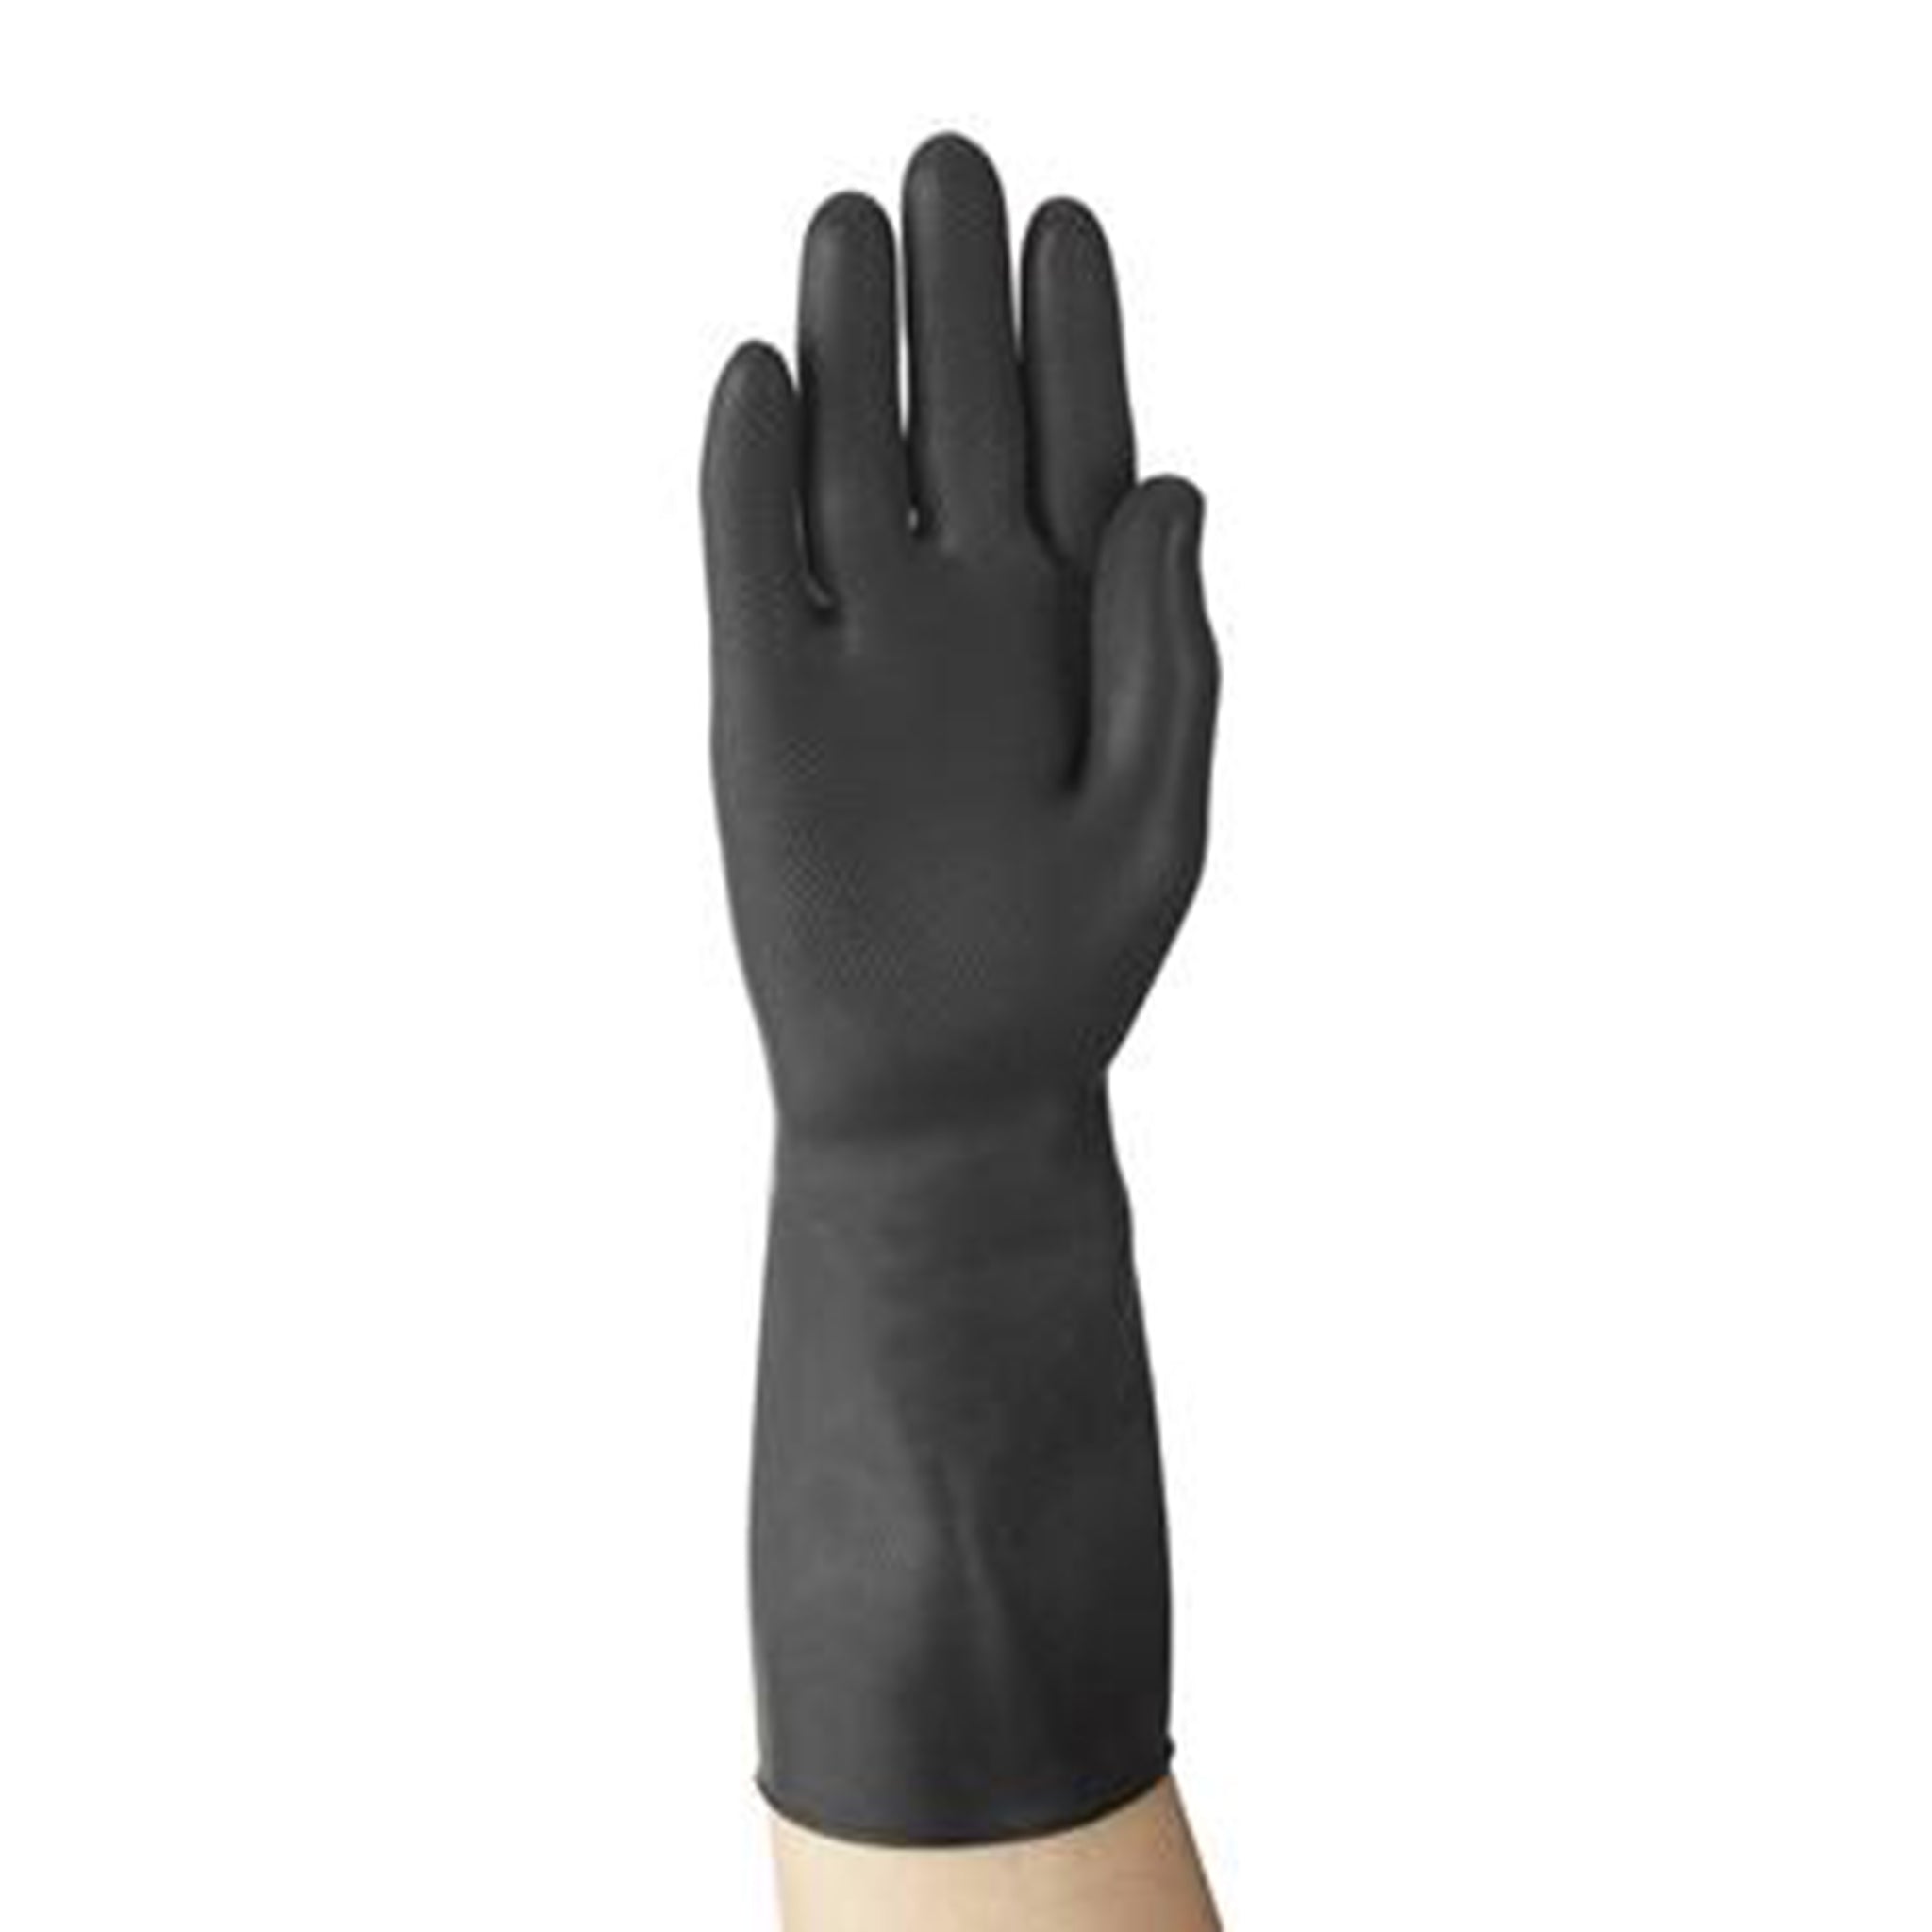 Glove Black Heavy Duty XL Size 10